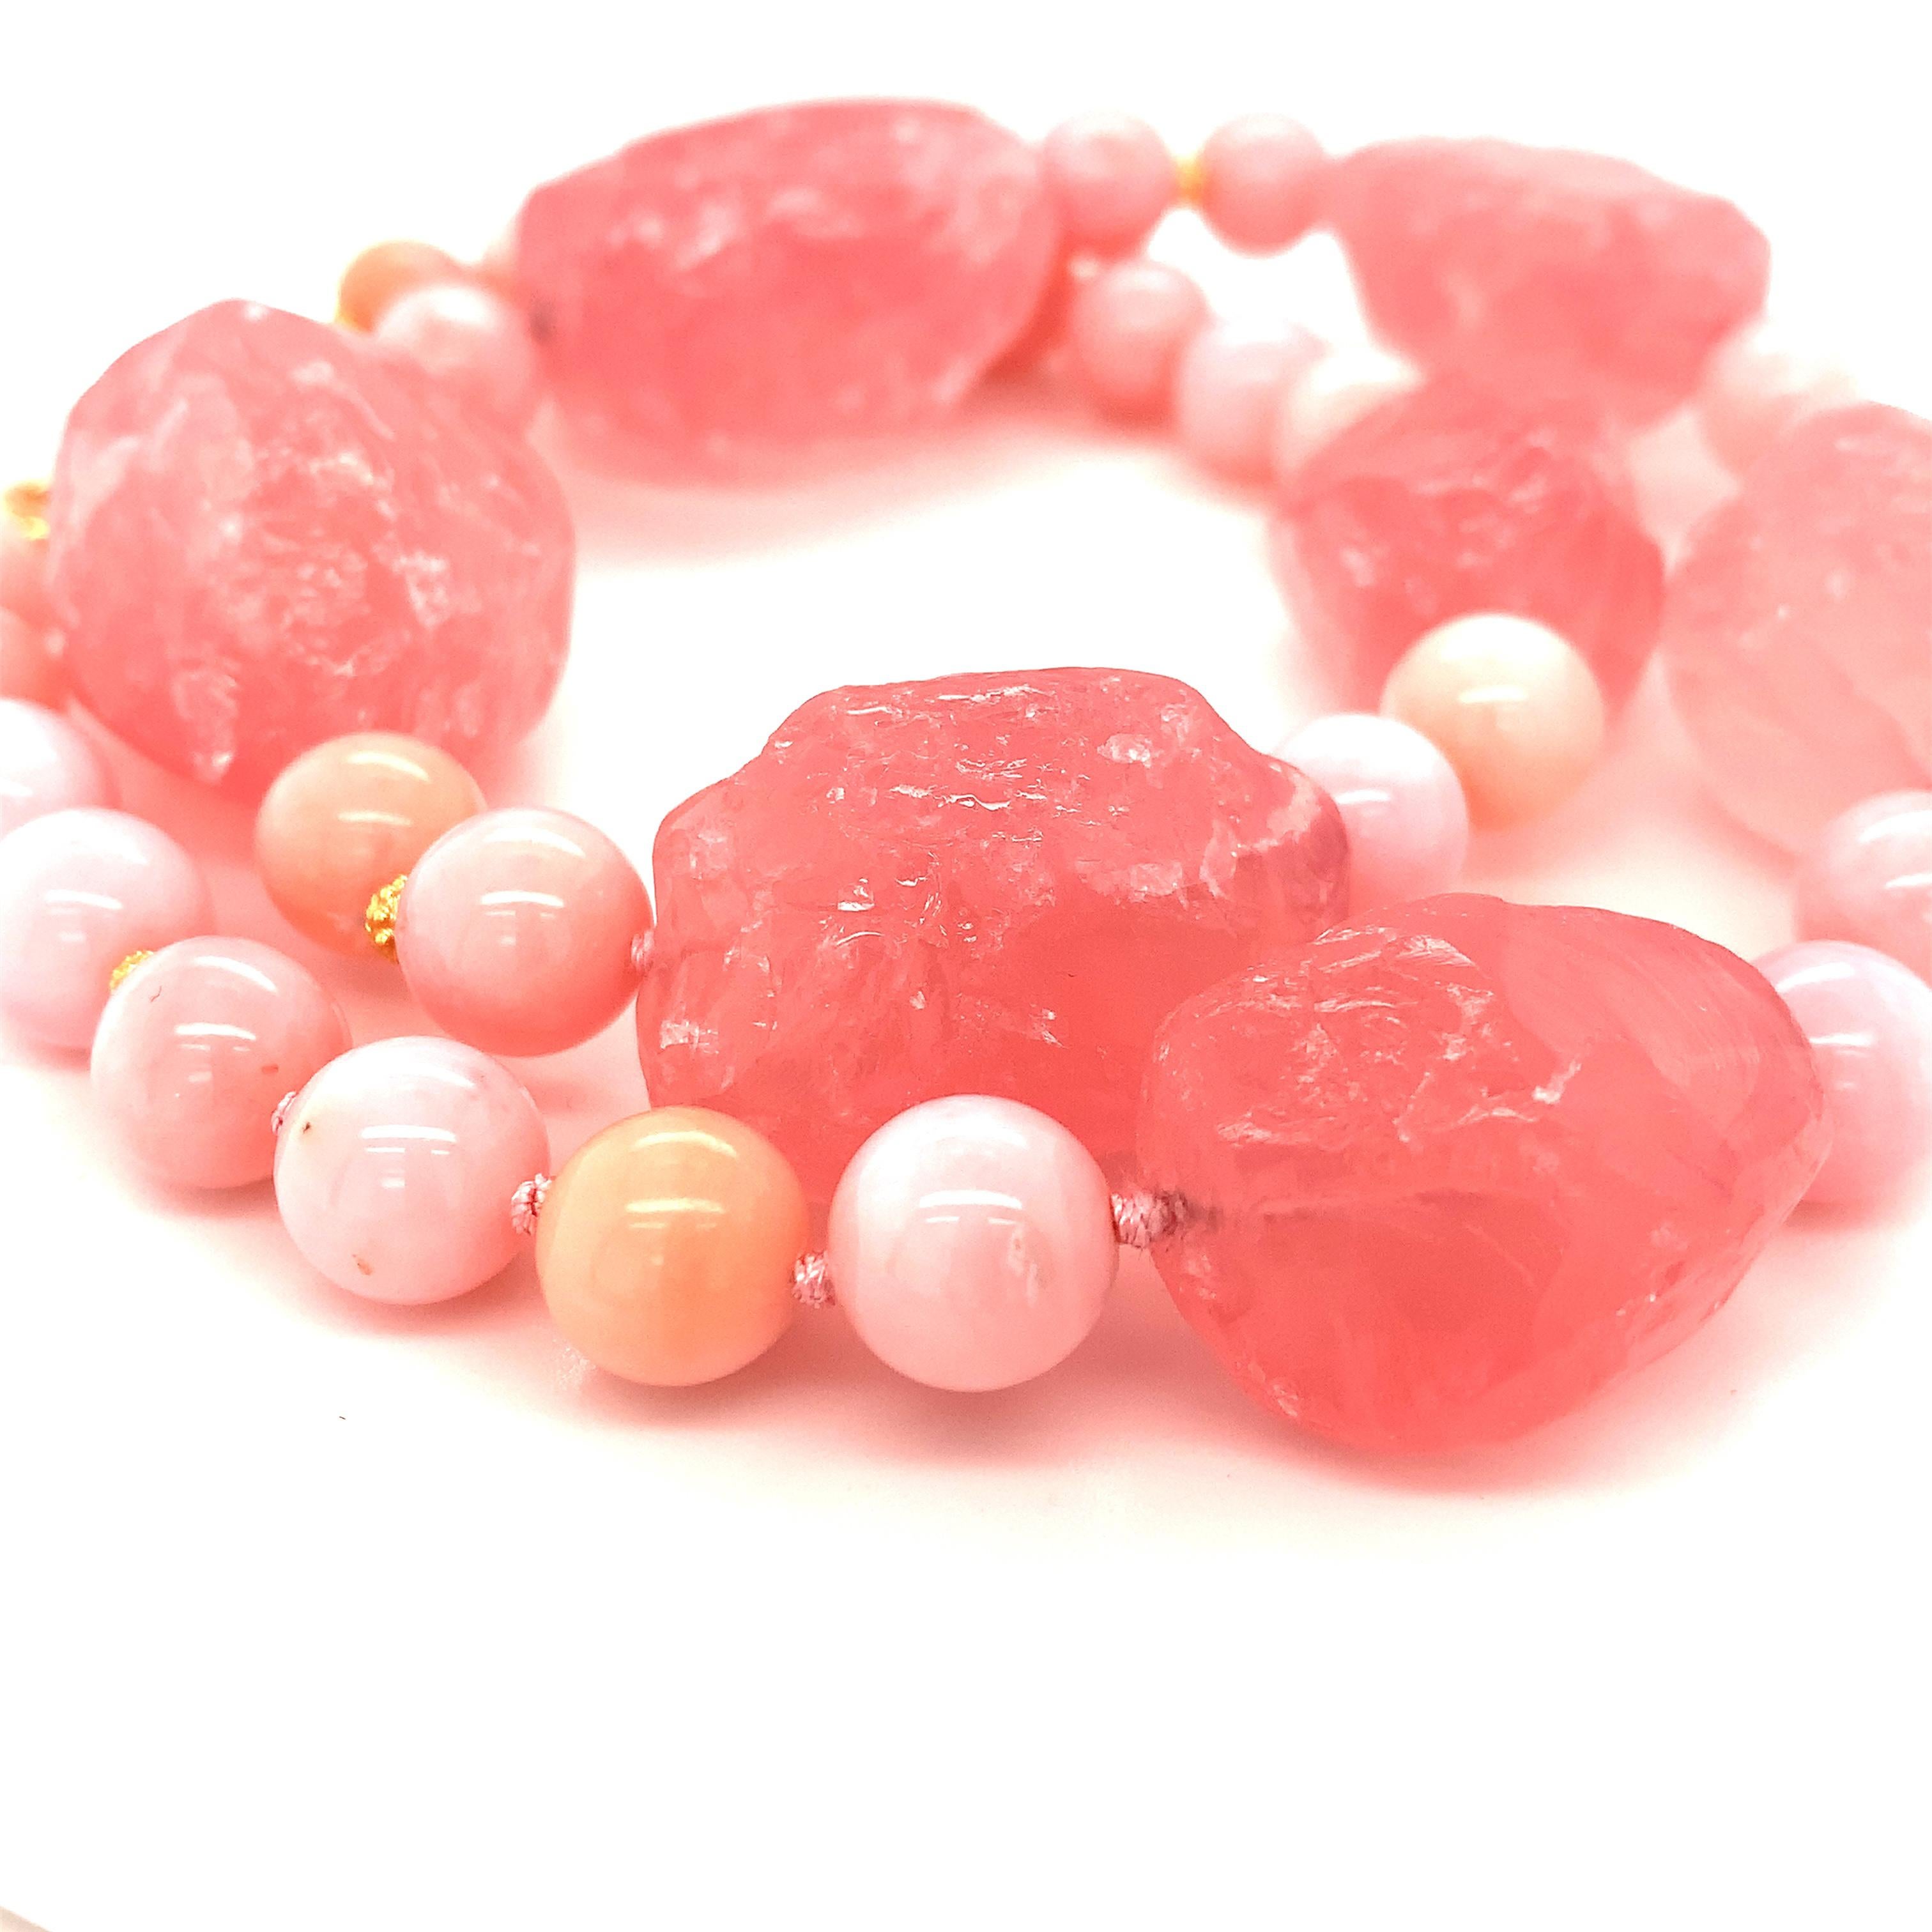 Tumbled Rose Quartz Nugget, Pink Opal Bead Necklace, 156 Grams